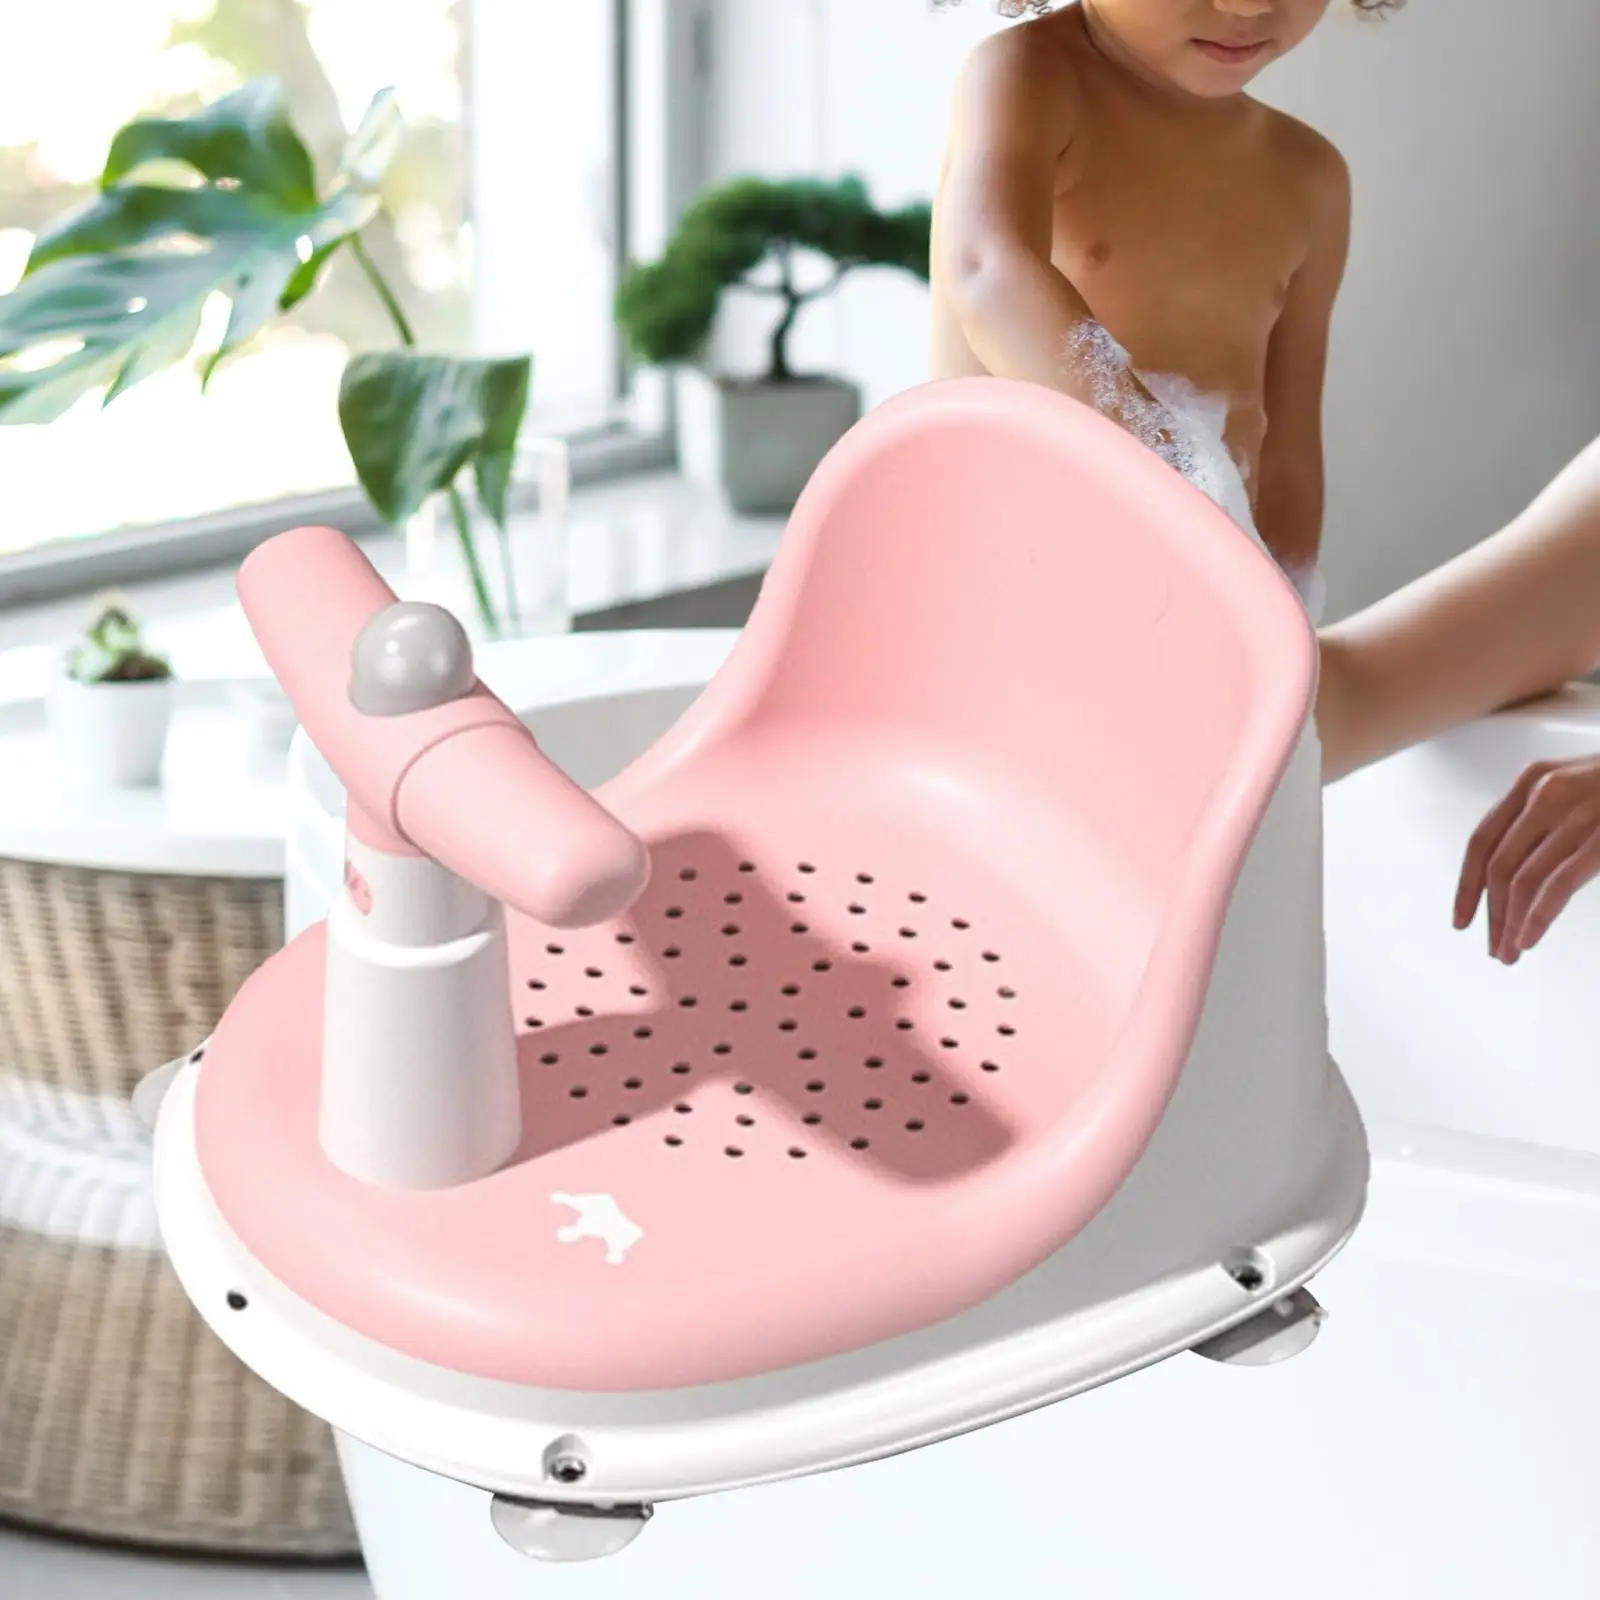 Baby Bathtub Seat Hanging Foldable Environmentally Friendly Baby Bath Seat for Bathroom Living Room Home